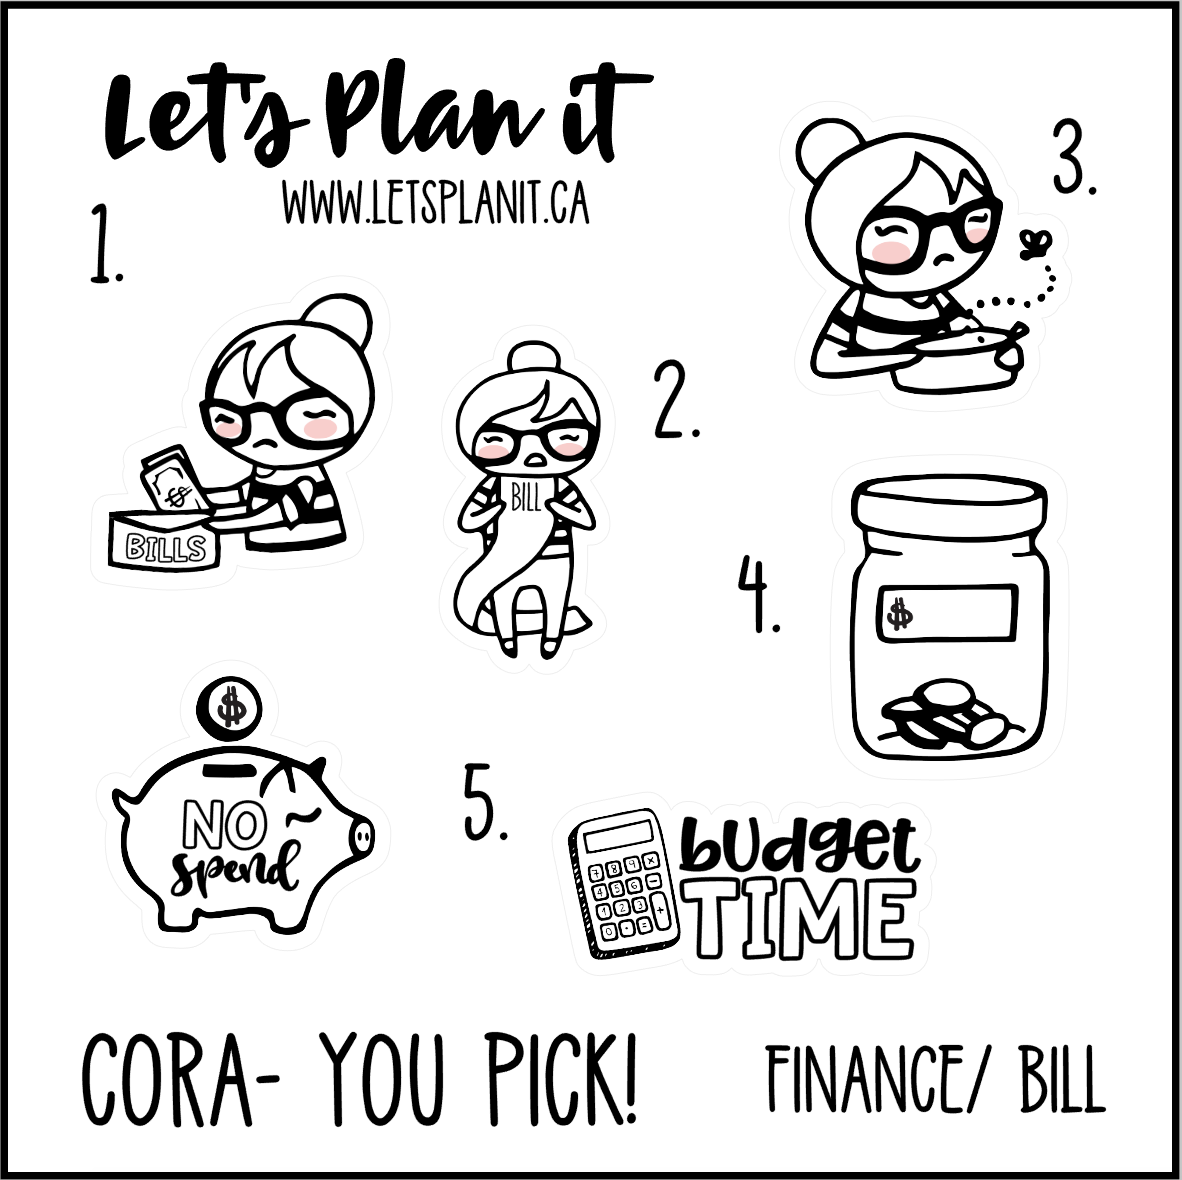 Cora-u-pick- Finances/ Bills